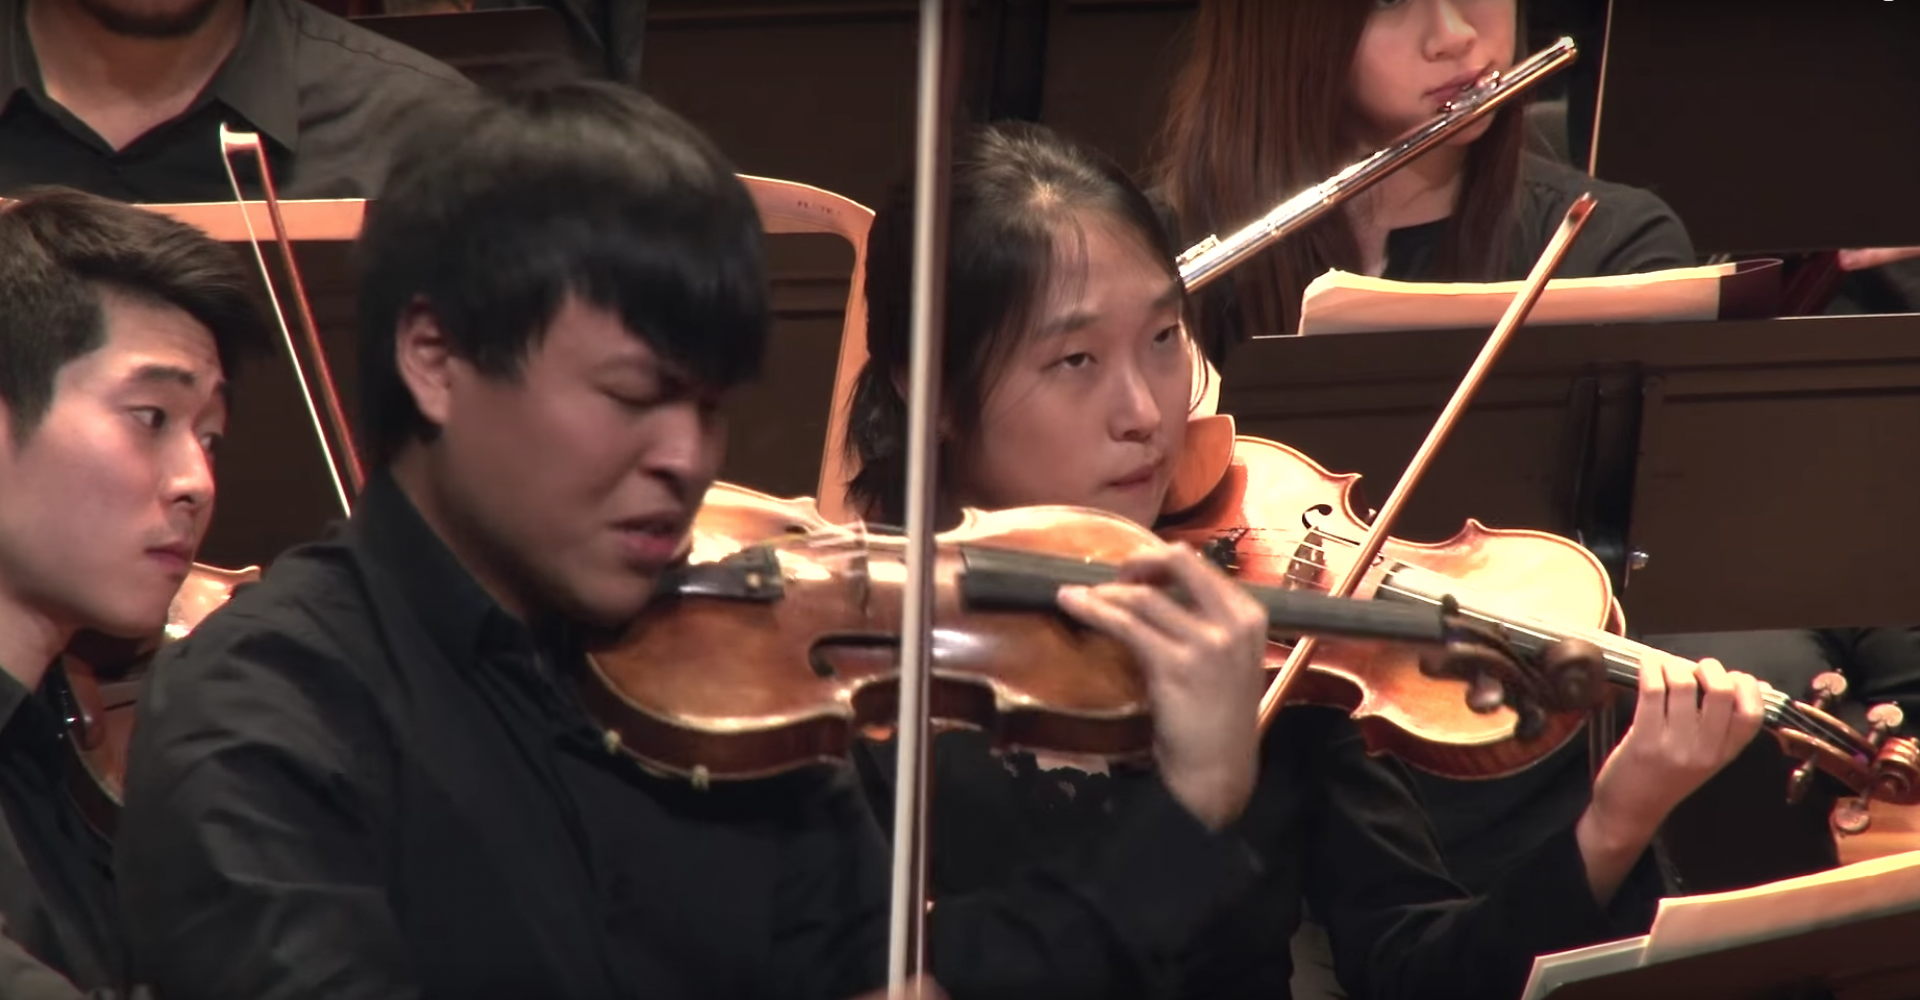 Luke Hsu plays the violin as a soloist with NEC Philharmonia behind him.